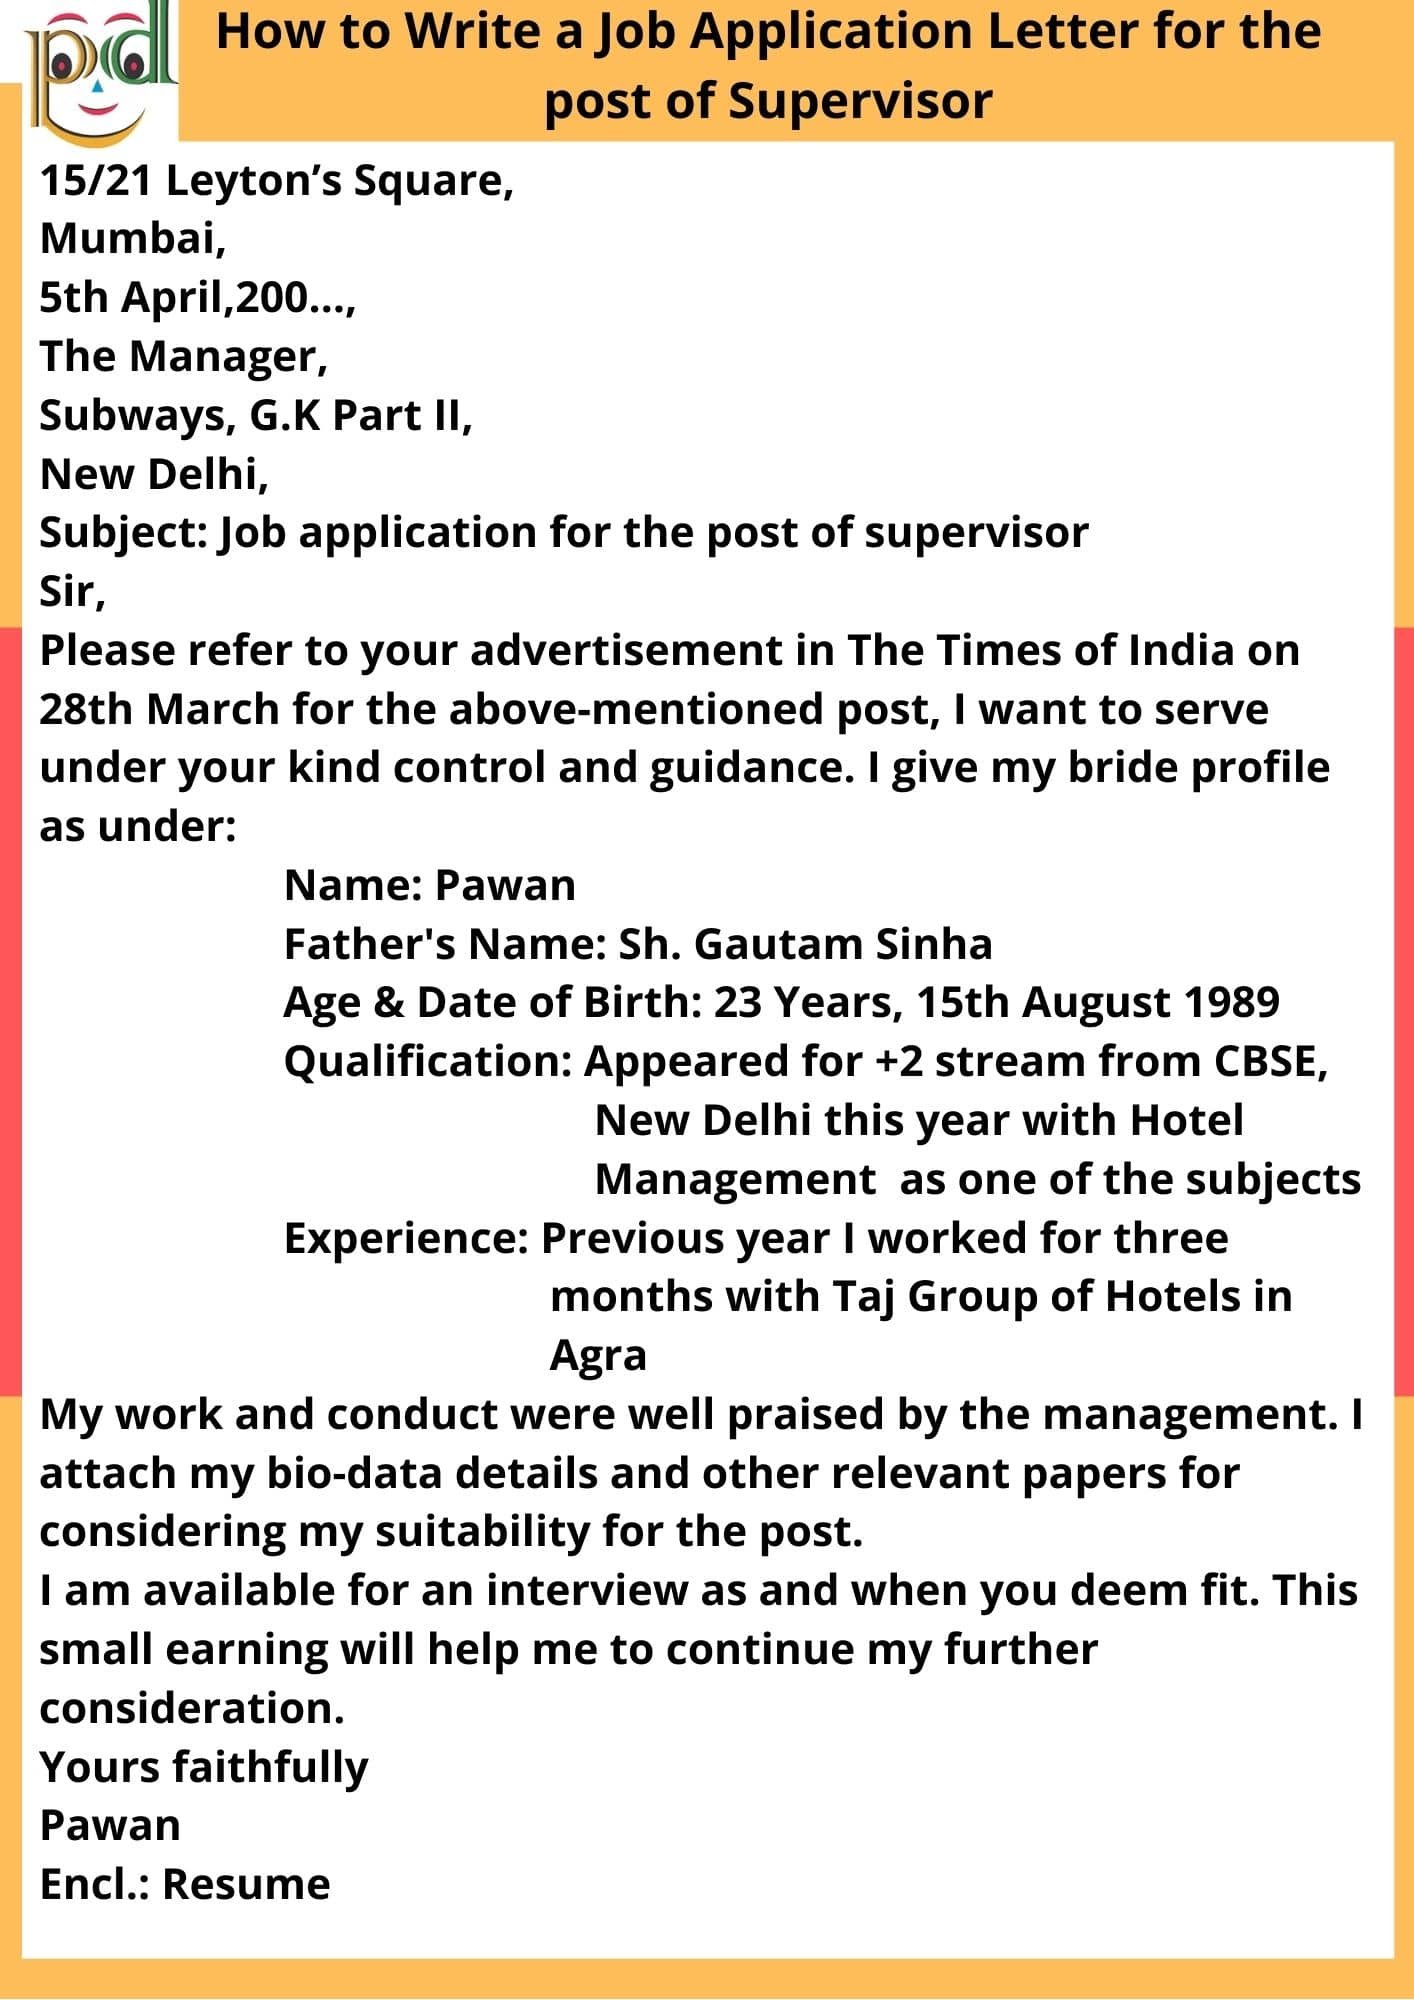 application letter for a post of supervisor